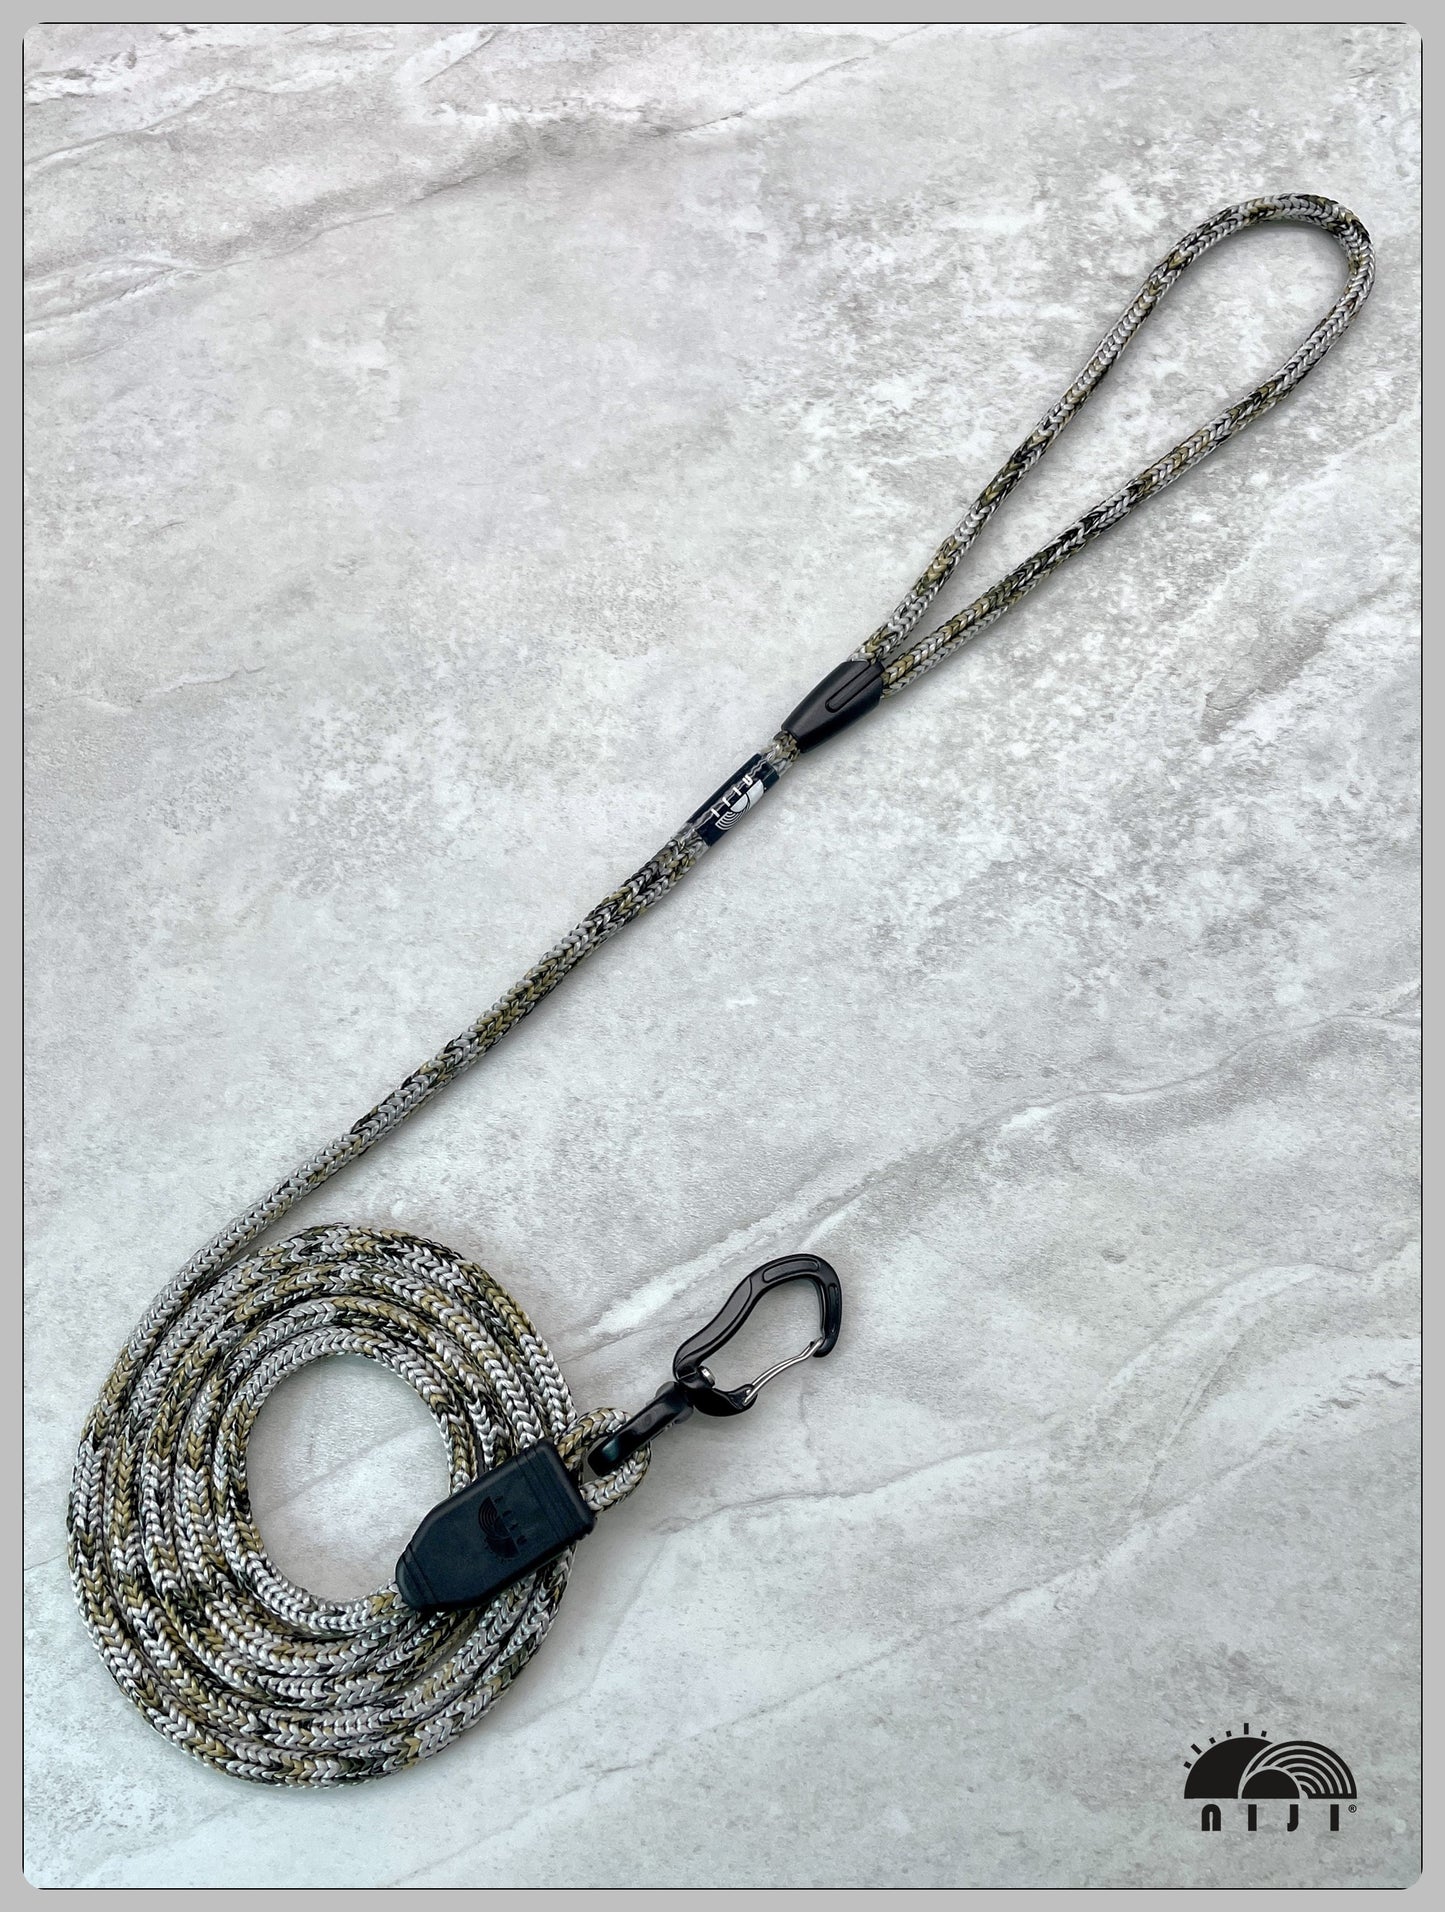 niji loop handle dog leash Knitted 9mm Silver camo